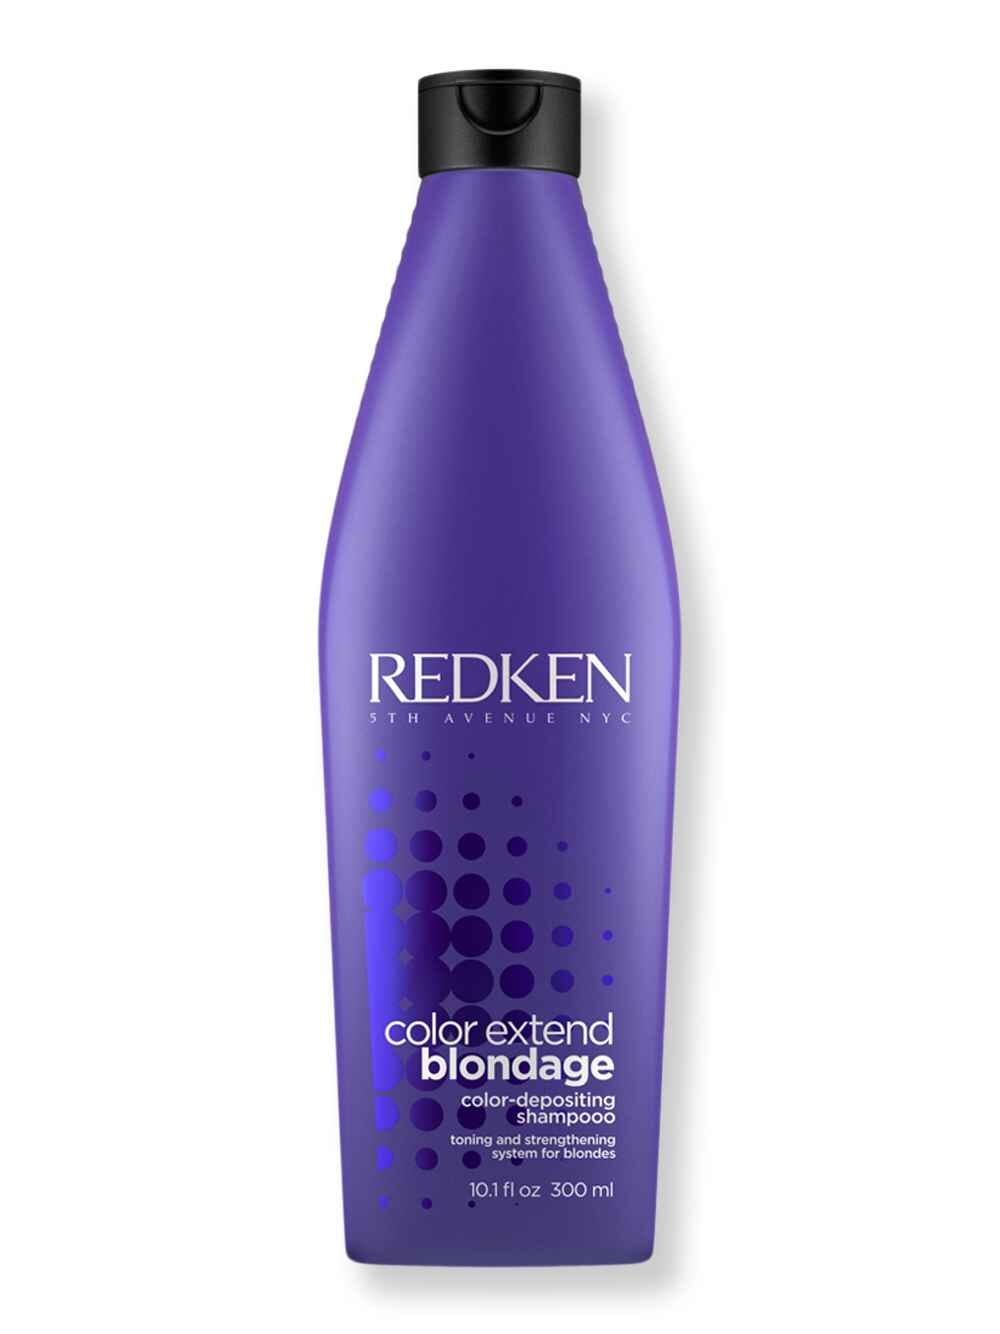 Redken Redken Color Extend Blondage Shampoo 10.1 oz300 ml Shampoos 